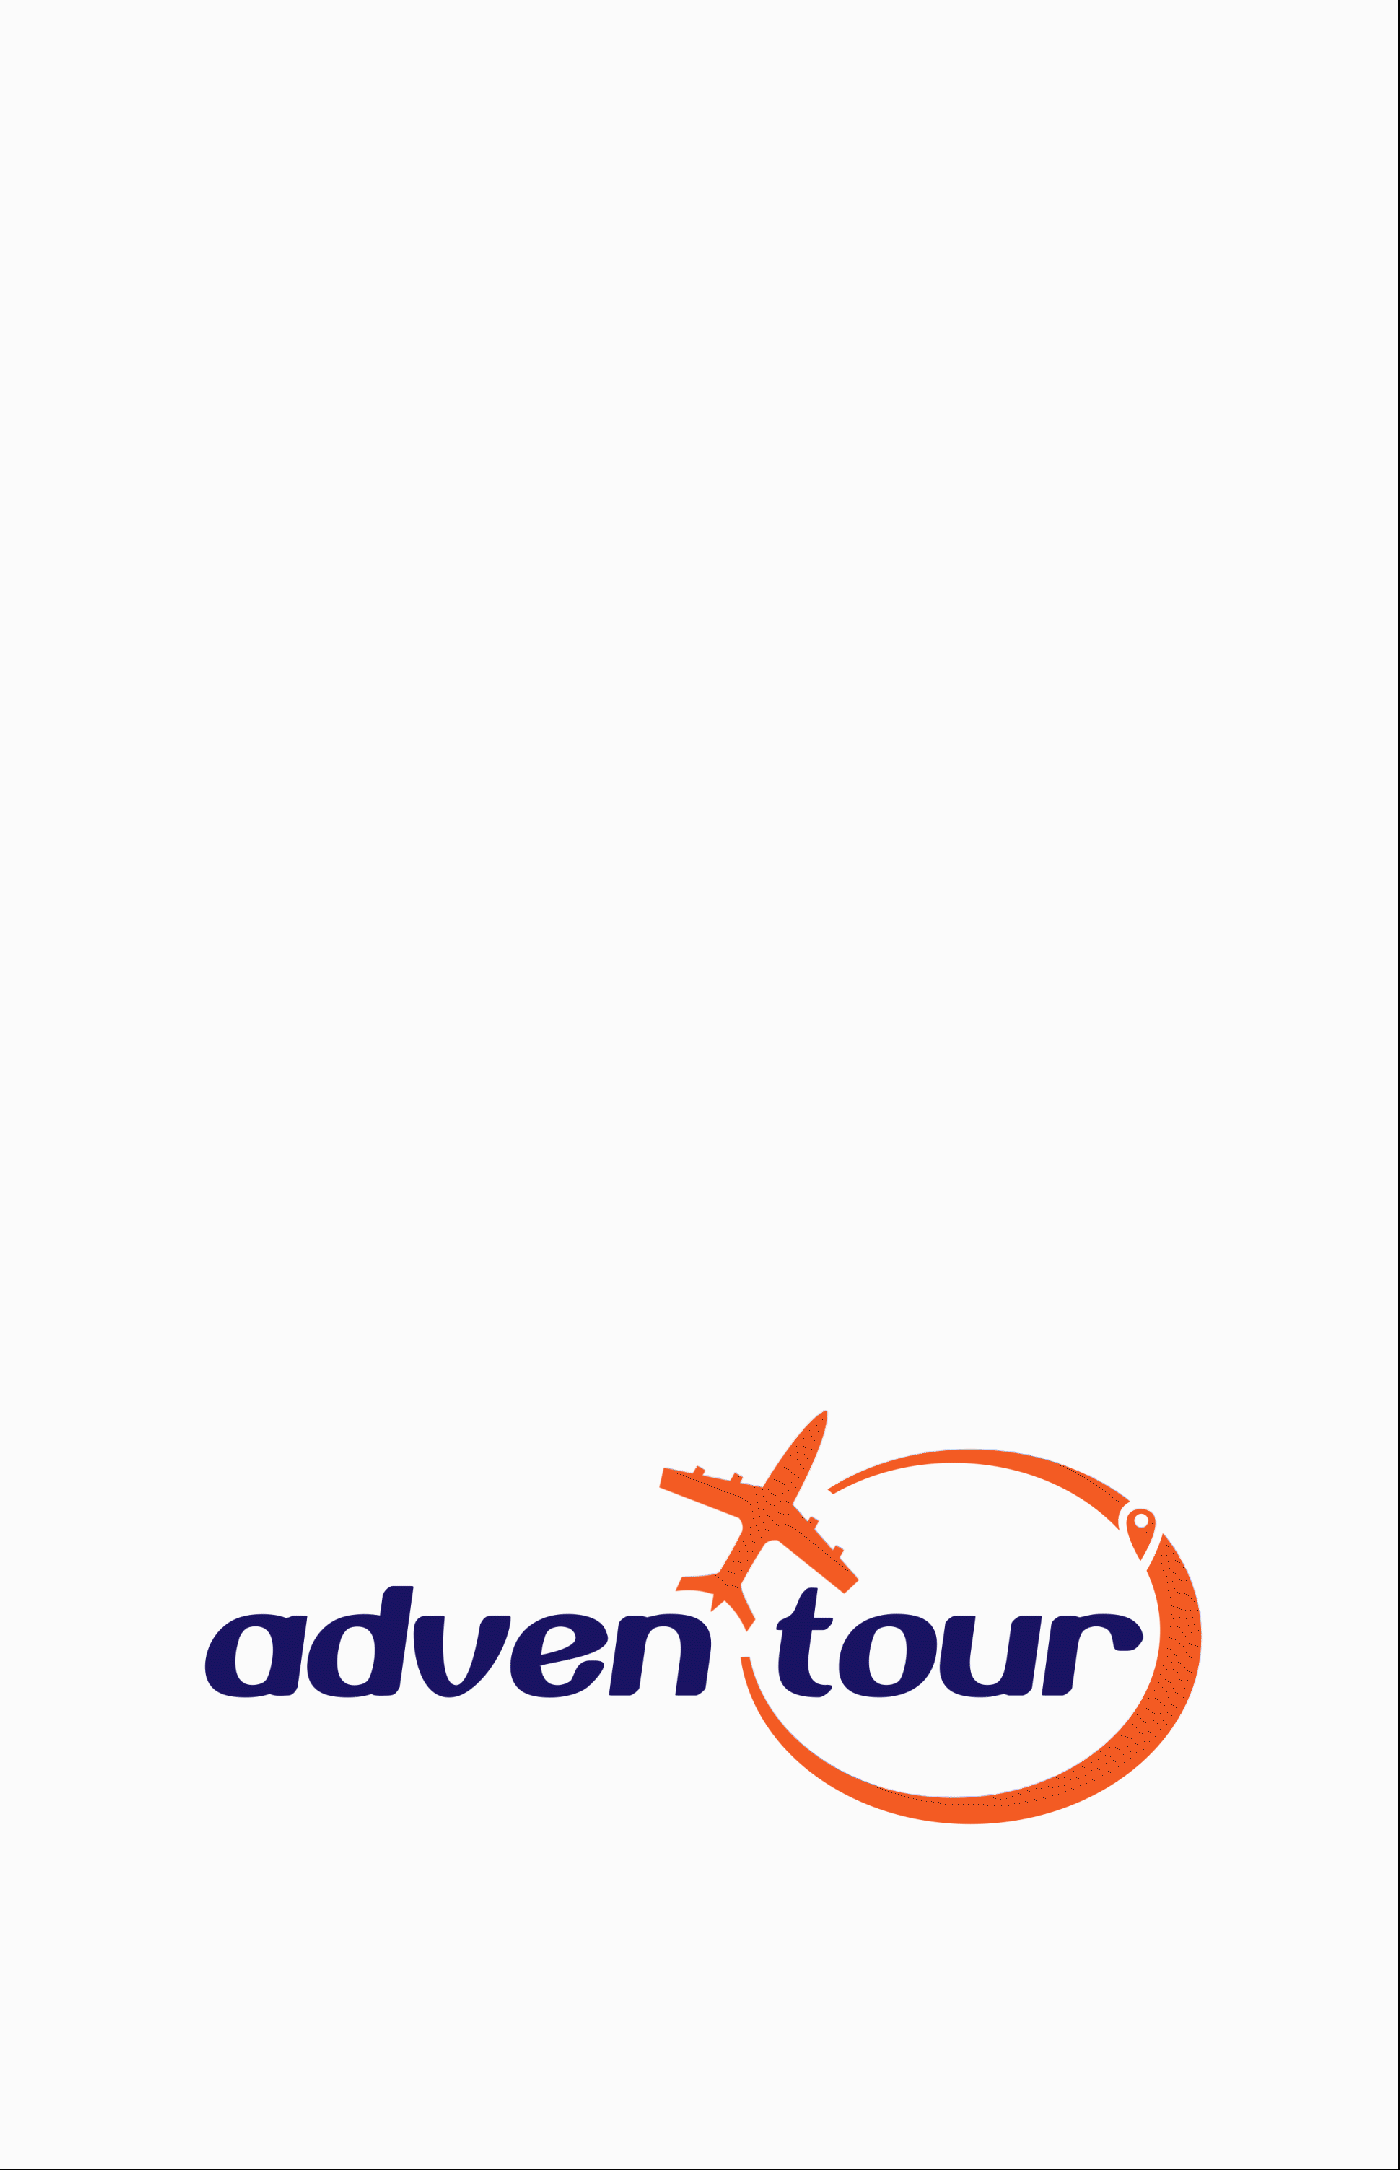 logo simple simple logo Tourist company logo Tourist Logo two colour TWO COLOUR LOGO